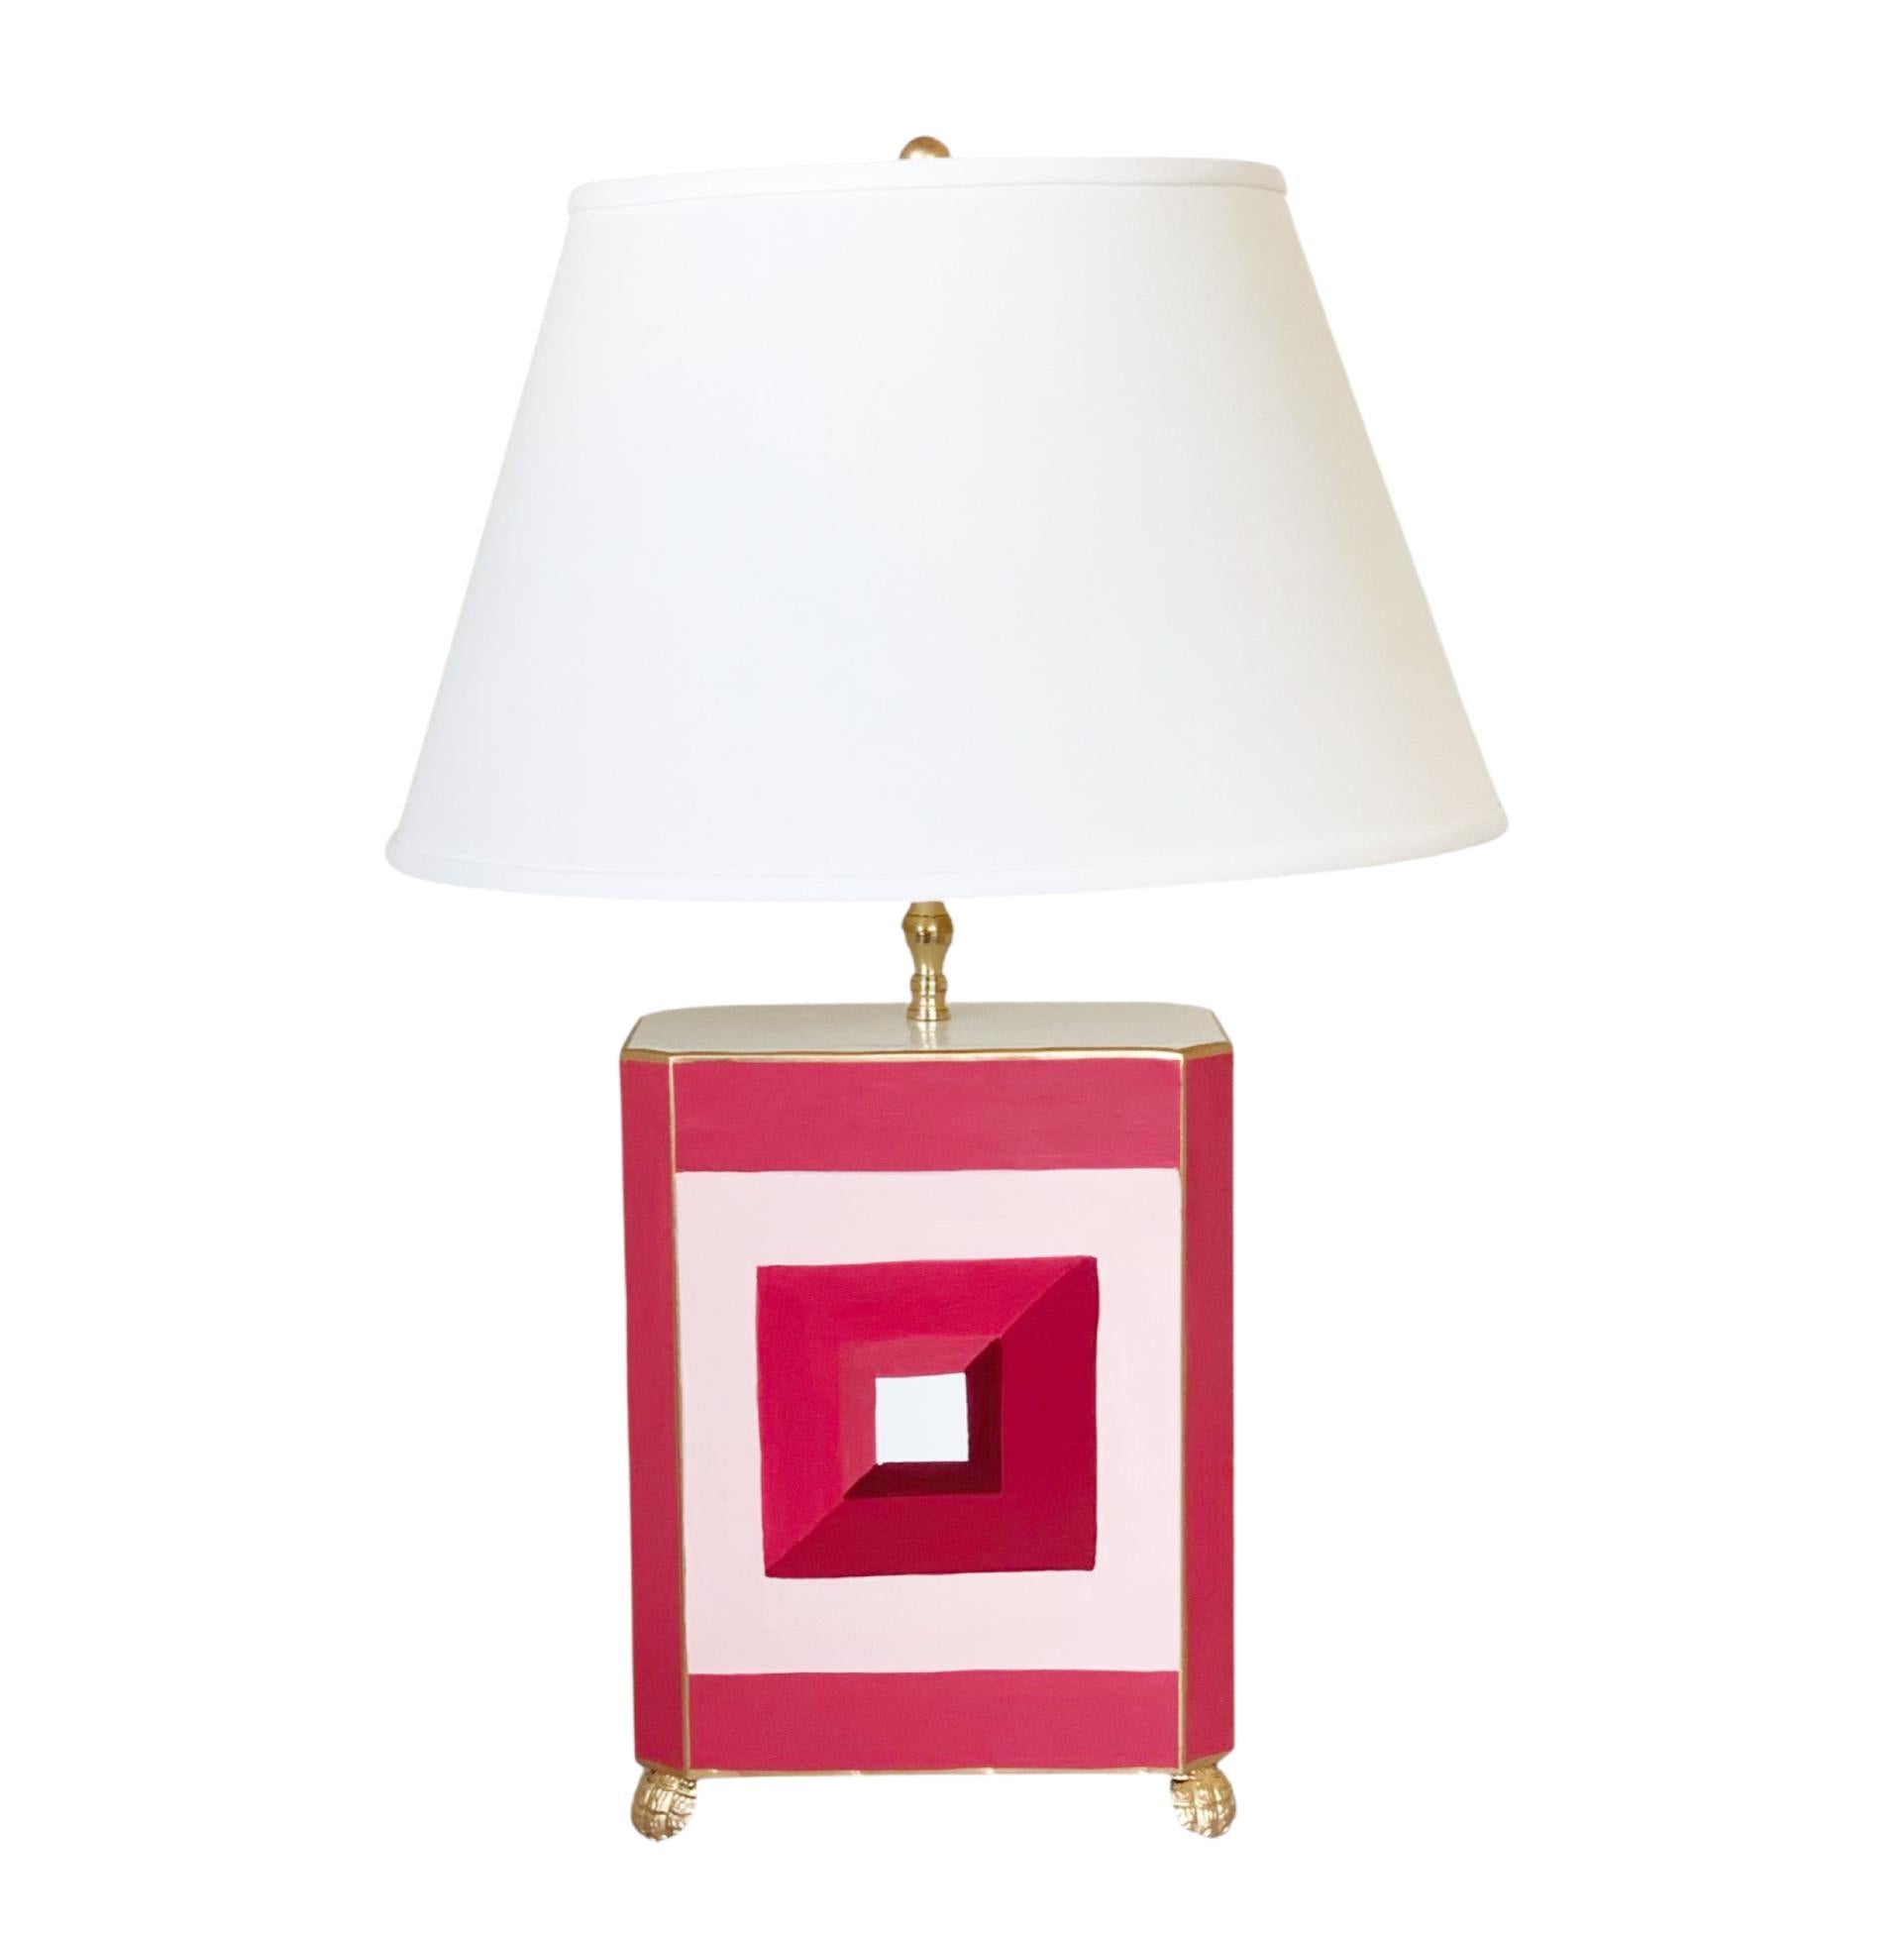 Dana Gibson Gem Palace Lamp in Pink